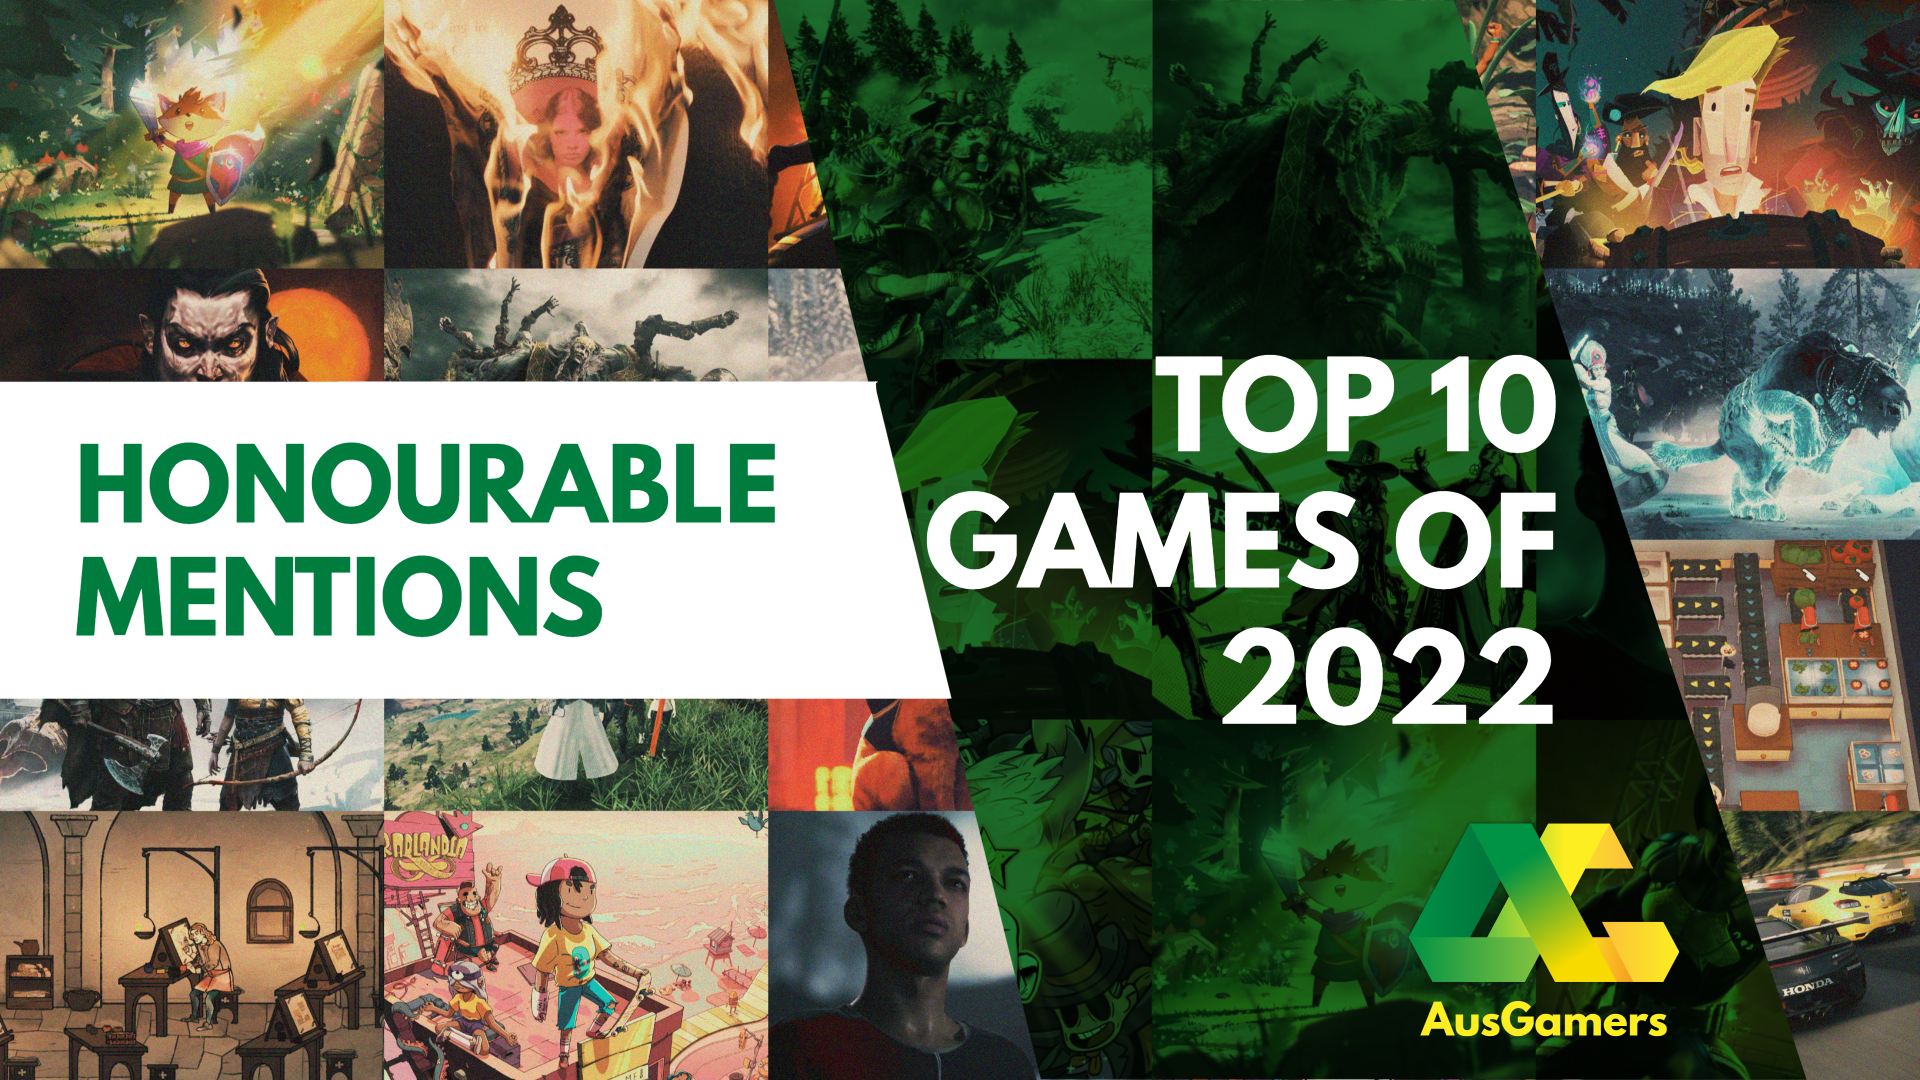 GameLuster's Top 10 Games Of 2022